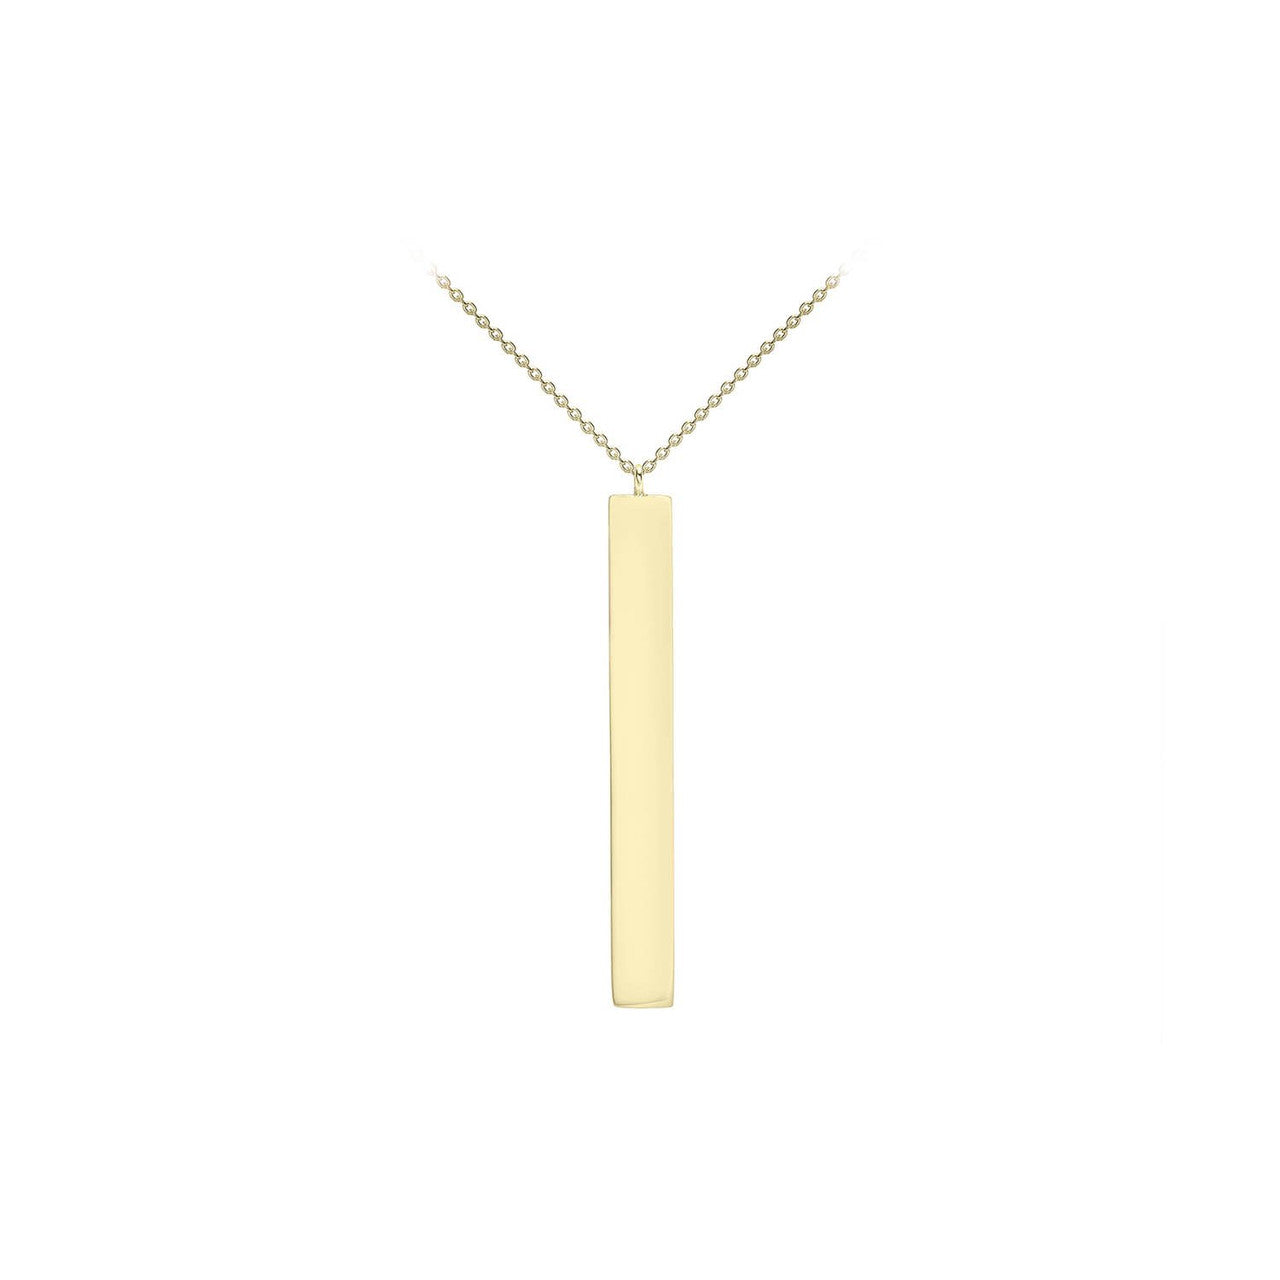 Ice Jewellery 9K Yellow Gold 4.9mm x 39.7mm Vertical Bar Adjustable Necklace 41cm-43cm - 1.19.7490 | Ice Jewellery Australia